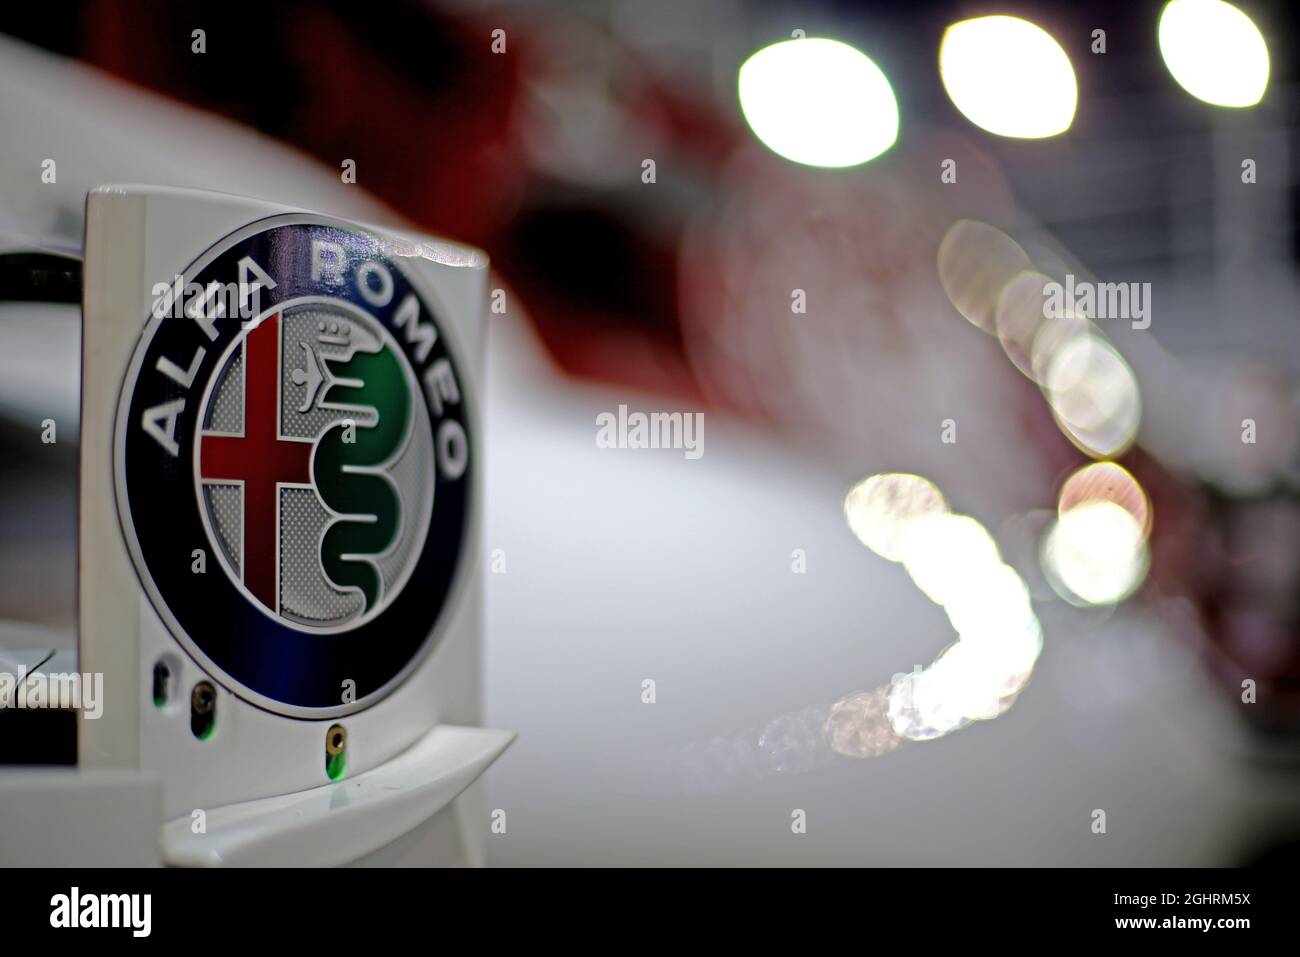 Alfa romeo racing logo hi-res stock photography and images - Alamy